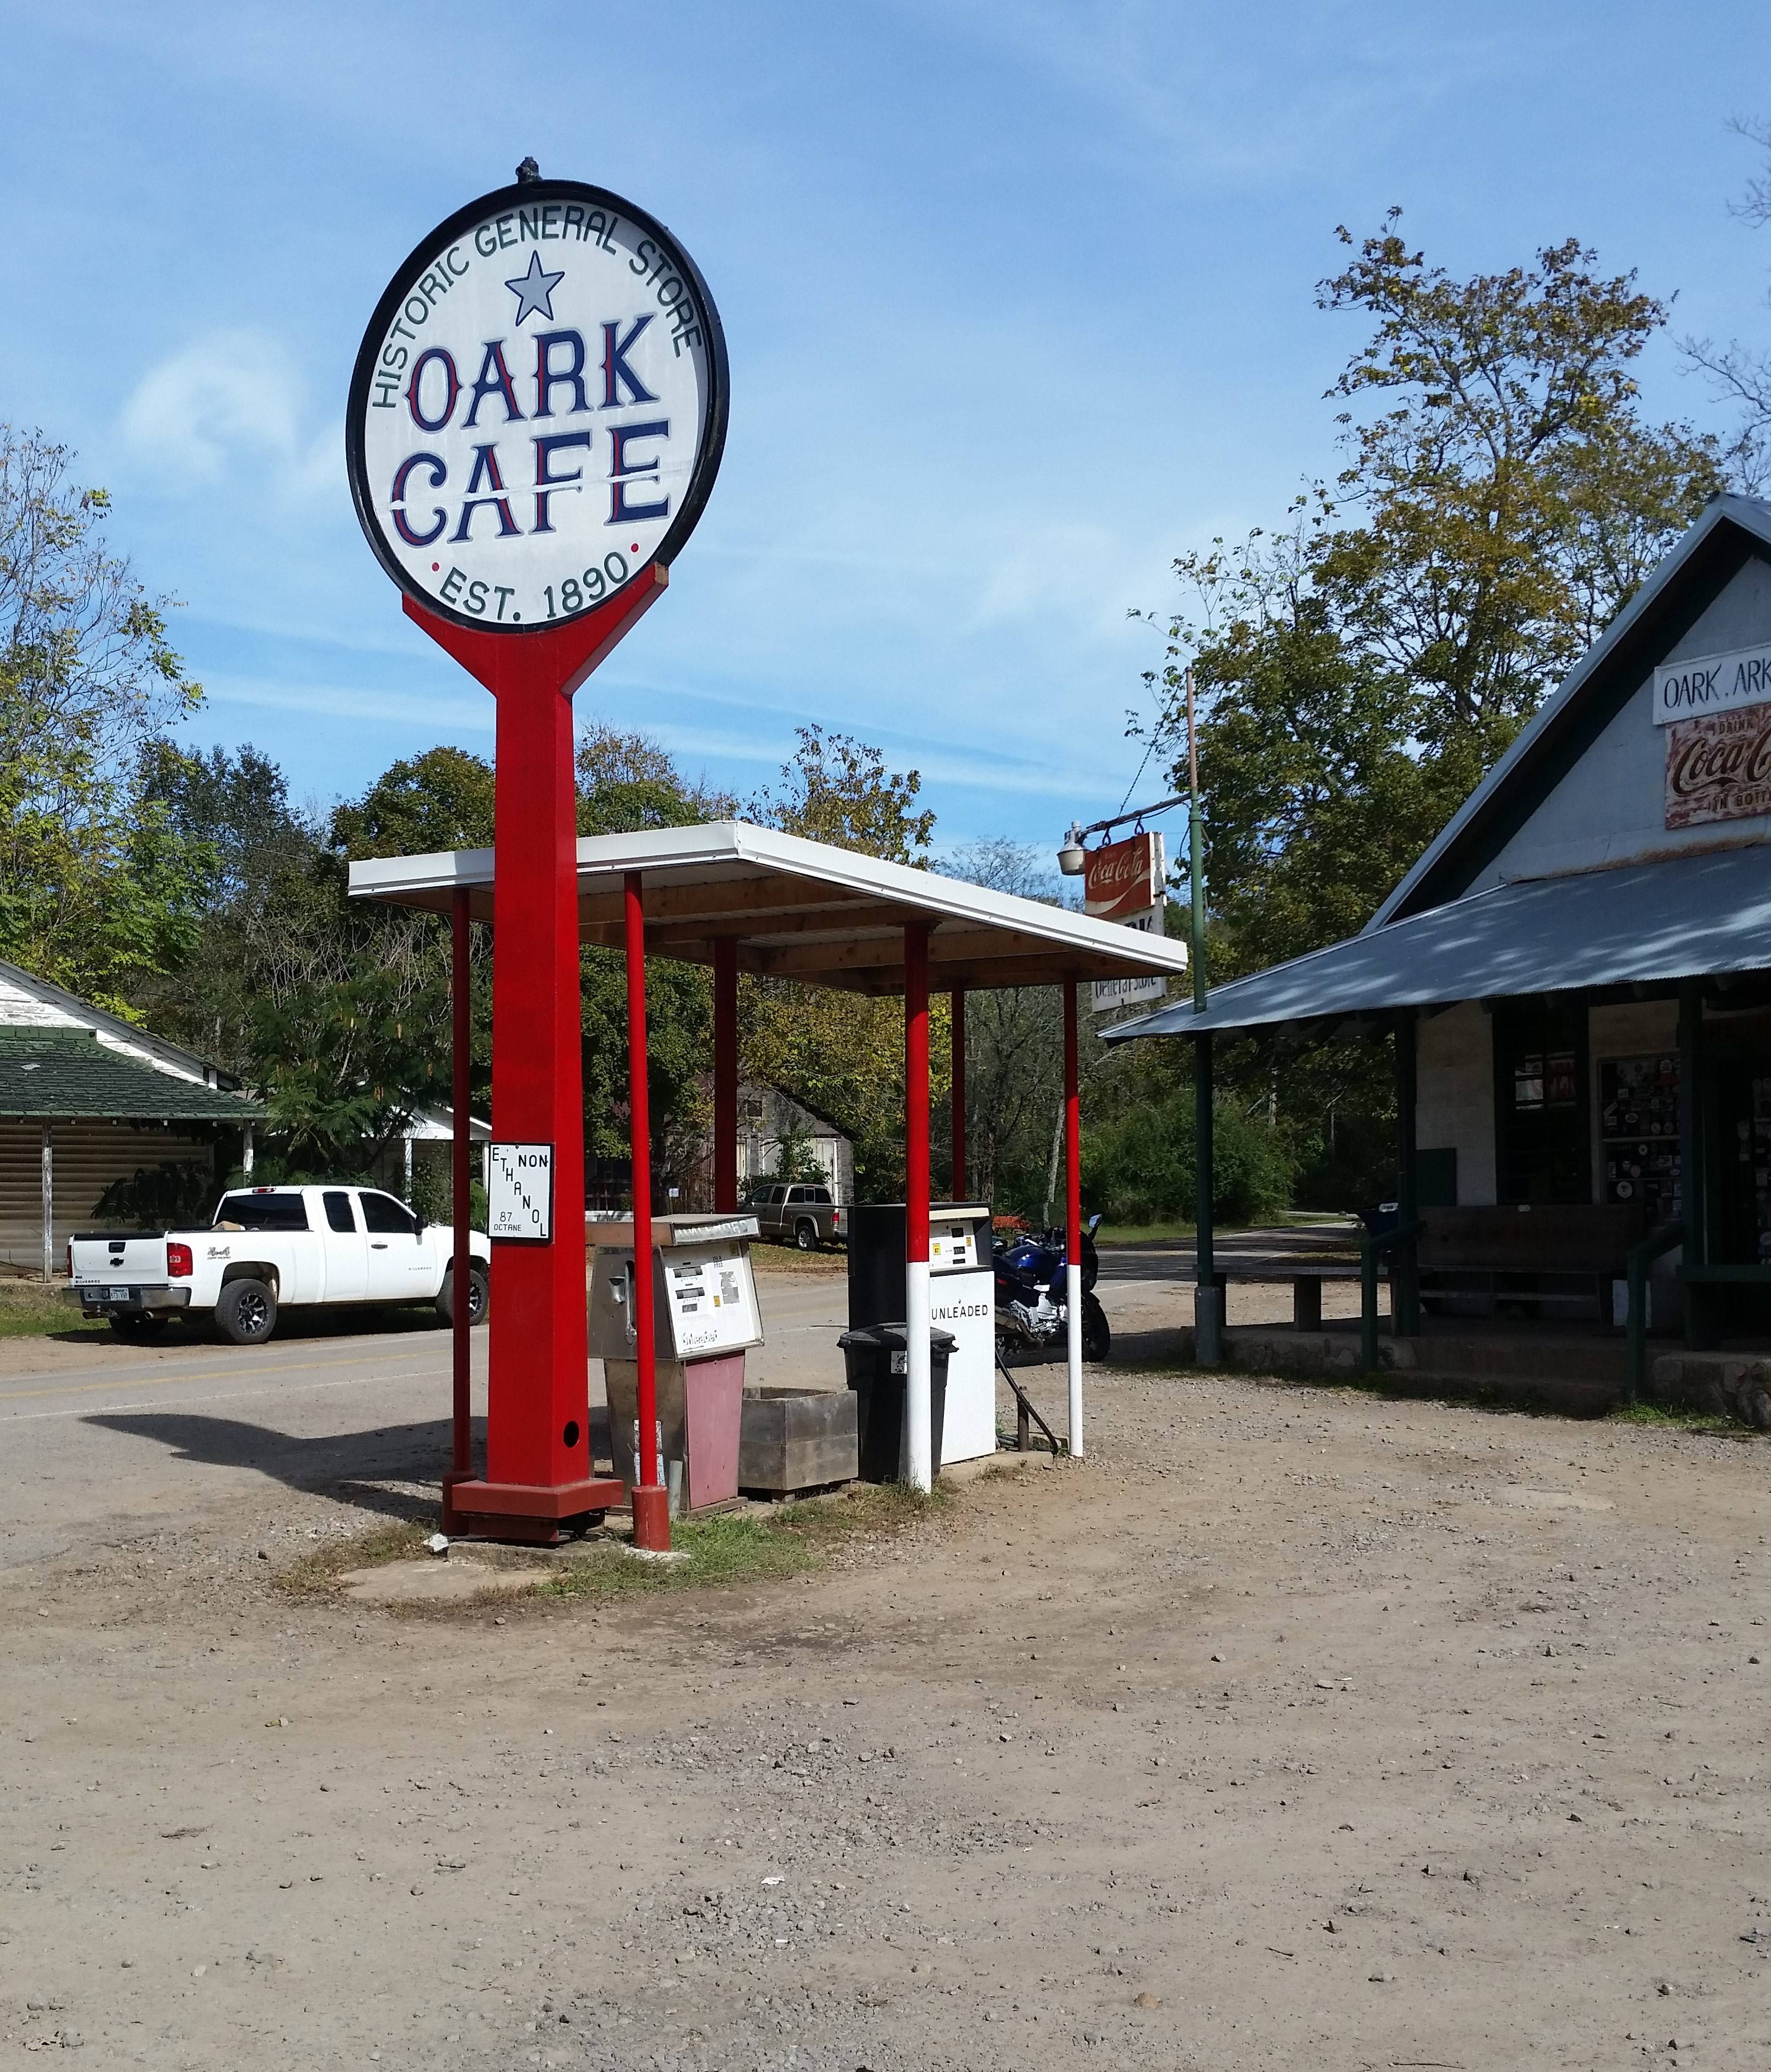 Ozark cafe